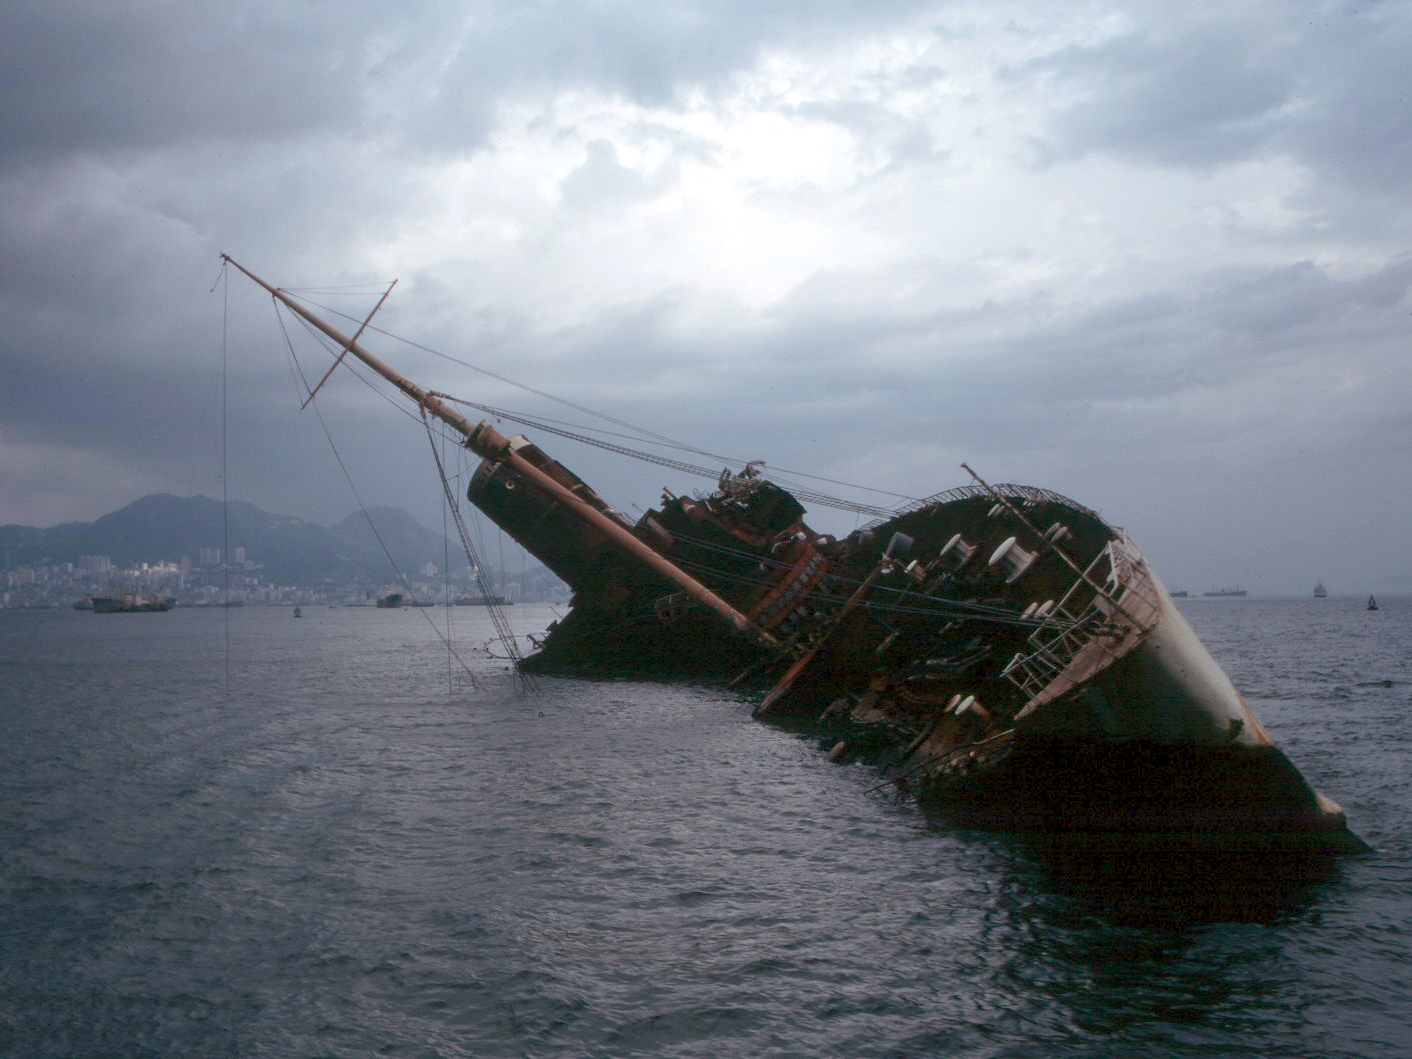 Wreck of Seawise University in Victoria Harbour, Hong Kong, Jul 1972